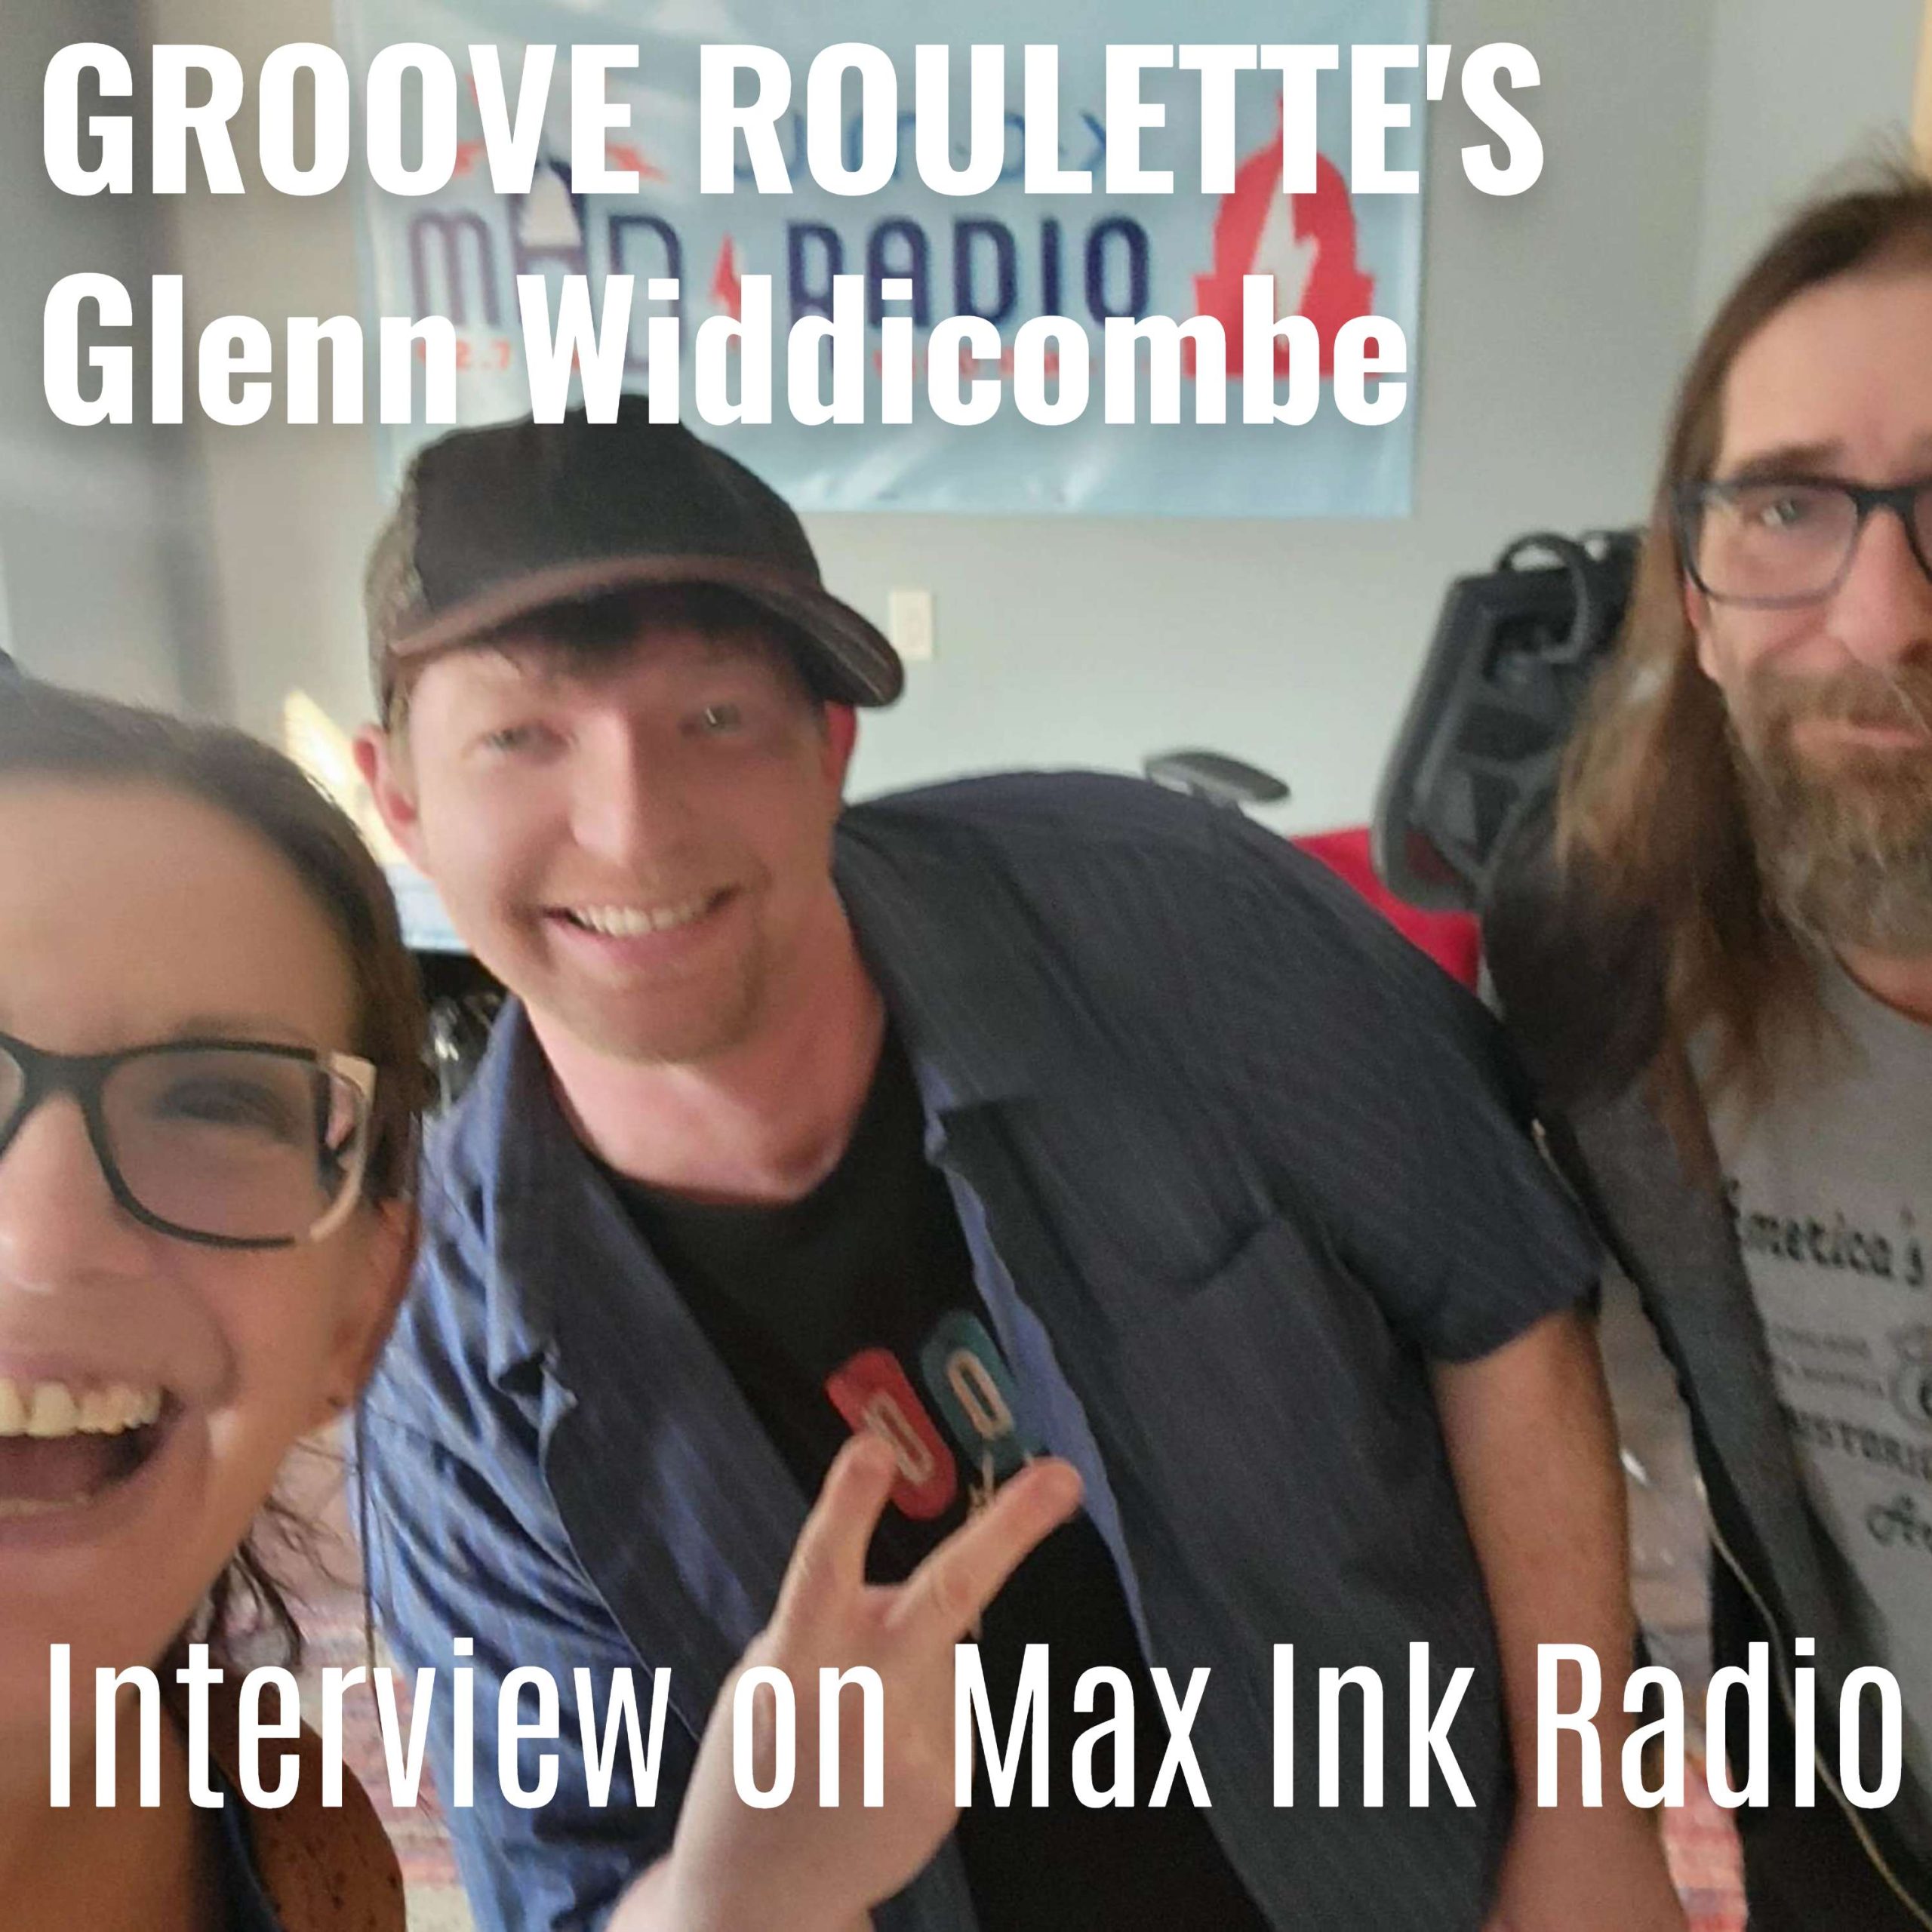 Groove Roulette's Glenn Widdicombe with Max Ink Radio crew